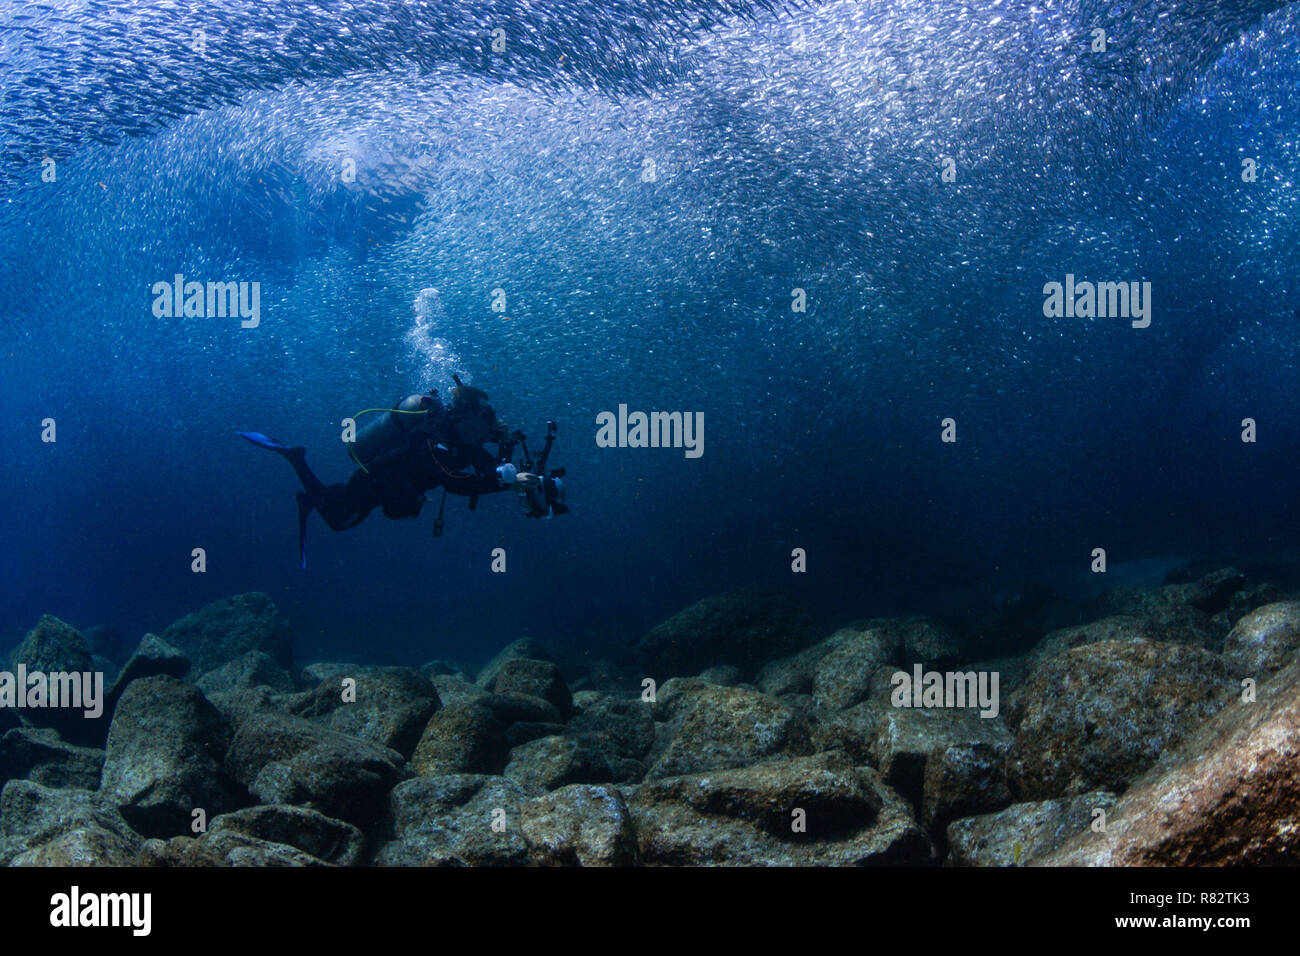 Sardine rock hi-res stock photography and images - Alamy